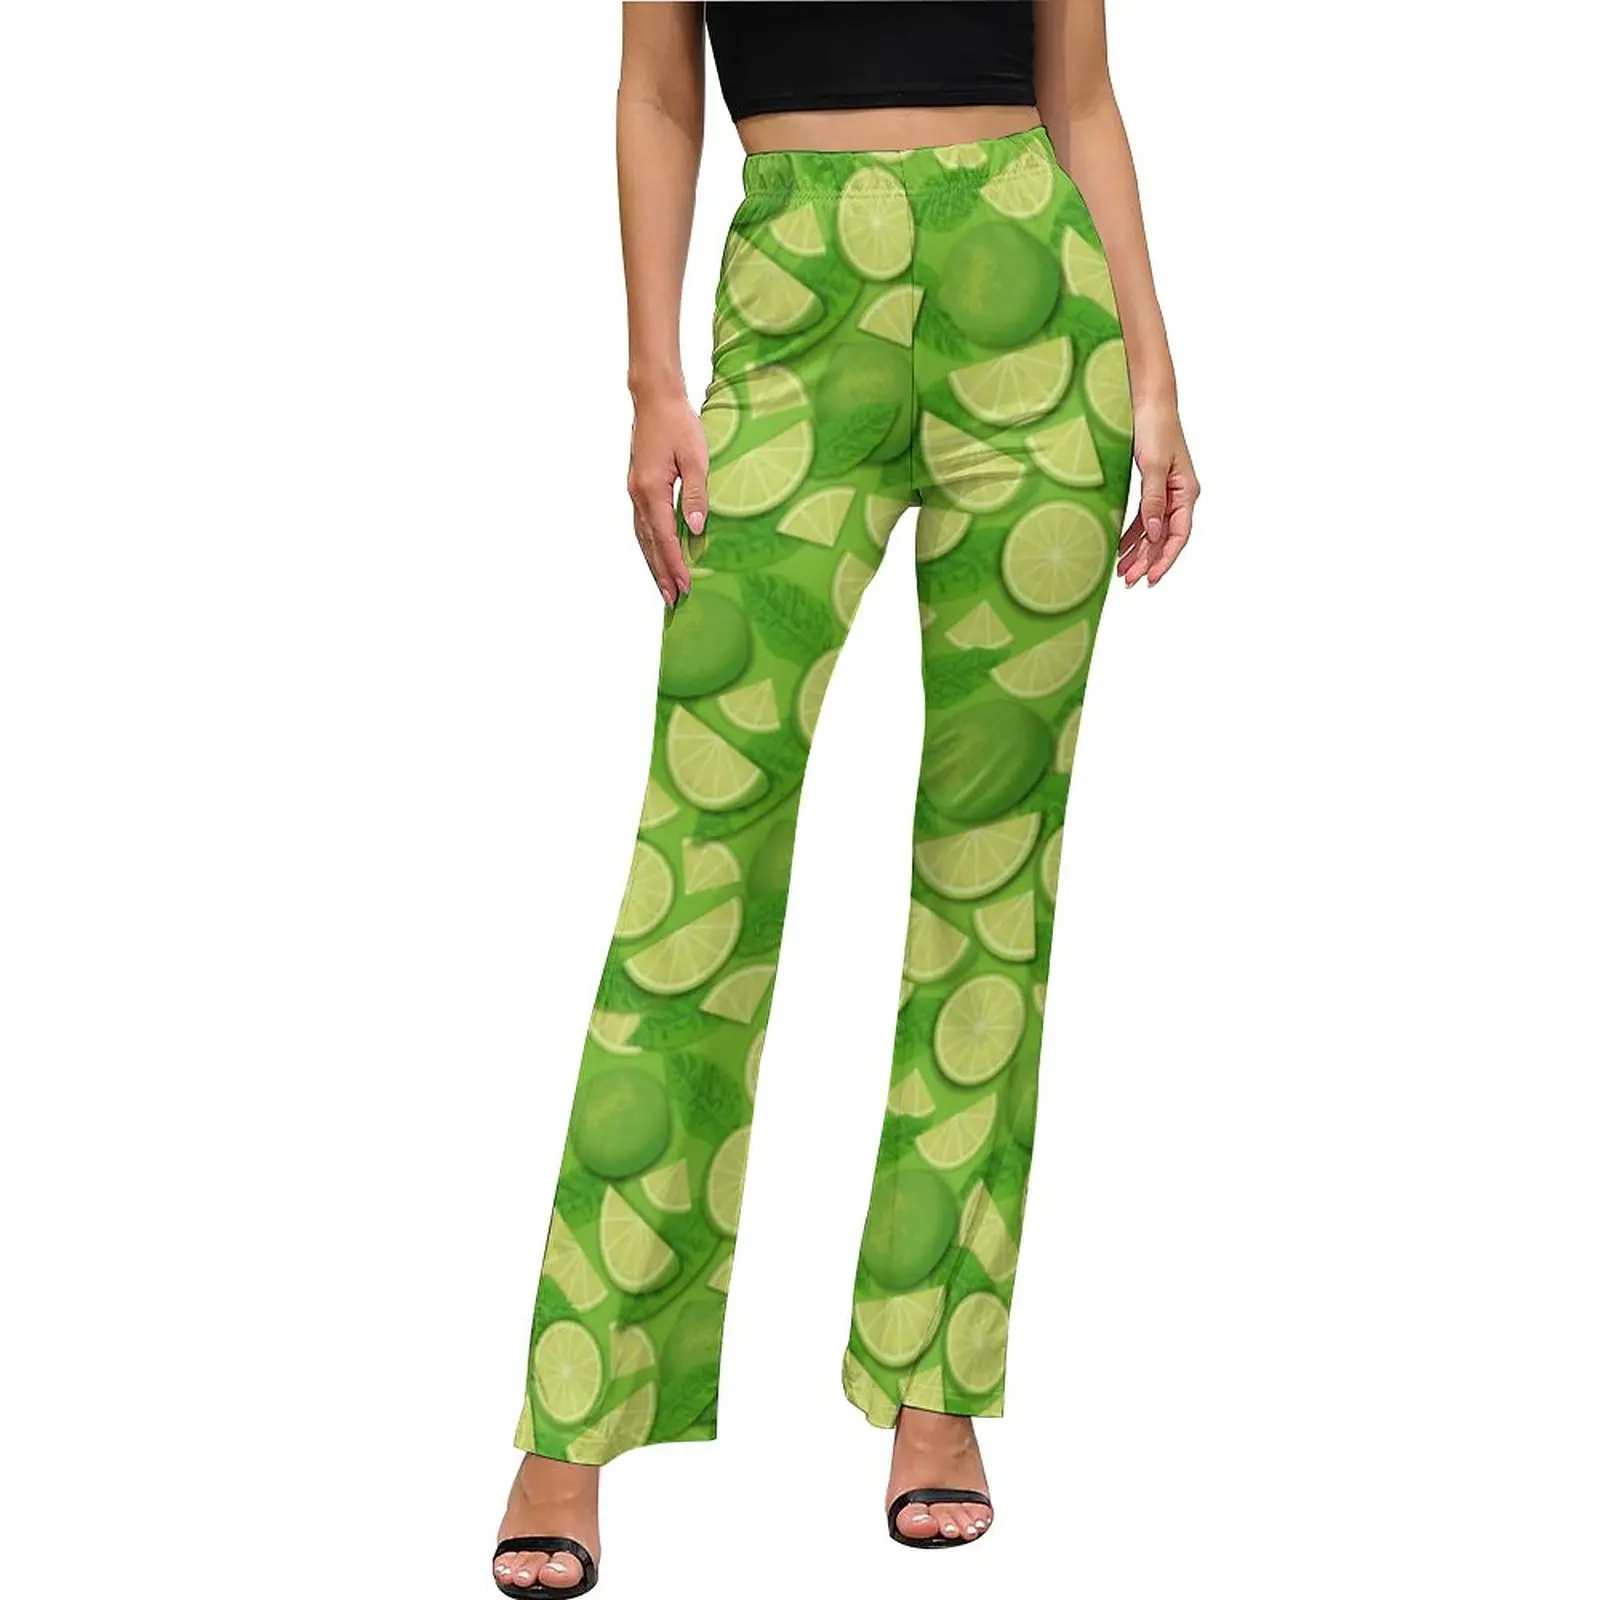 

Green Lemon Print Pants Lime Slice Classic Flared Trousers Summer Women Custom Aesthetic Slim Pants